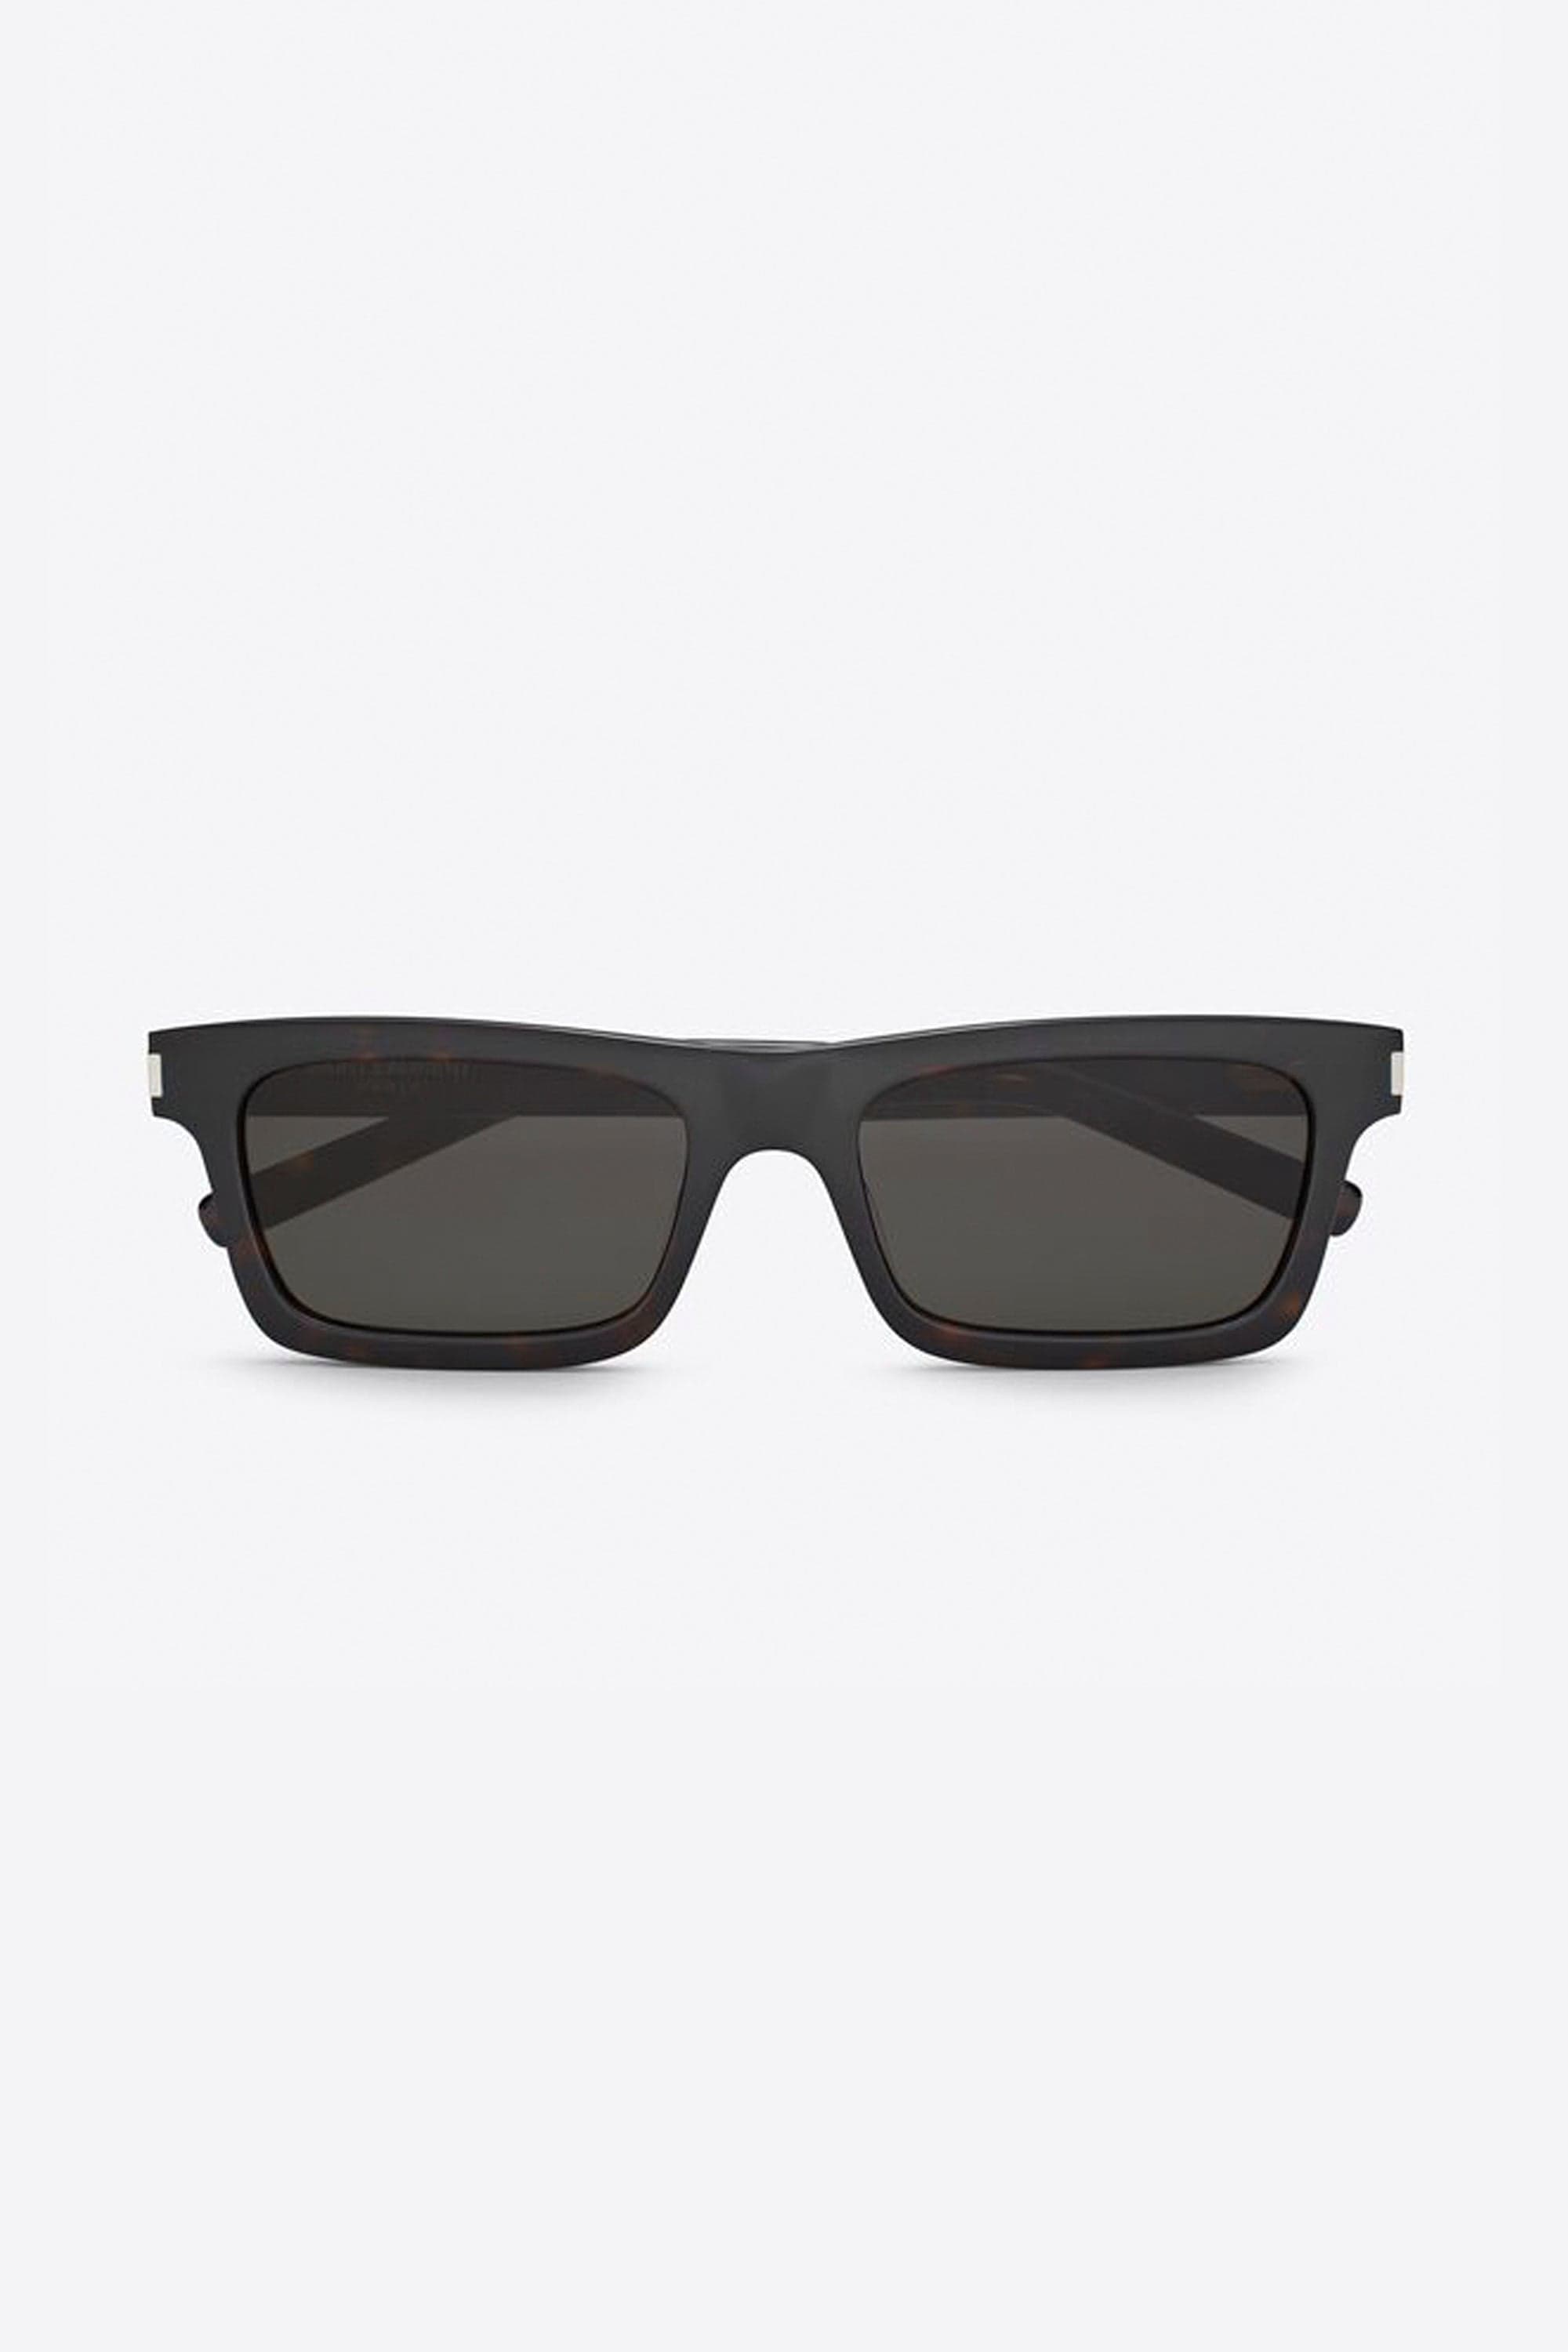 Saint Laurent angular havana grey UNISEX sunglasses - Eyewear Club